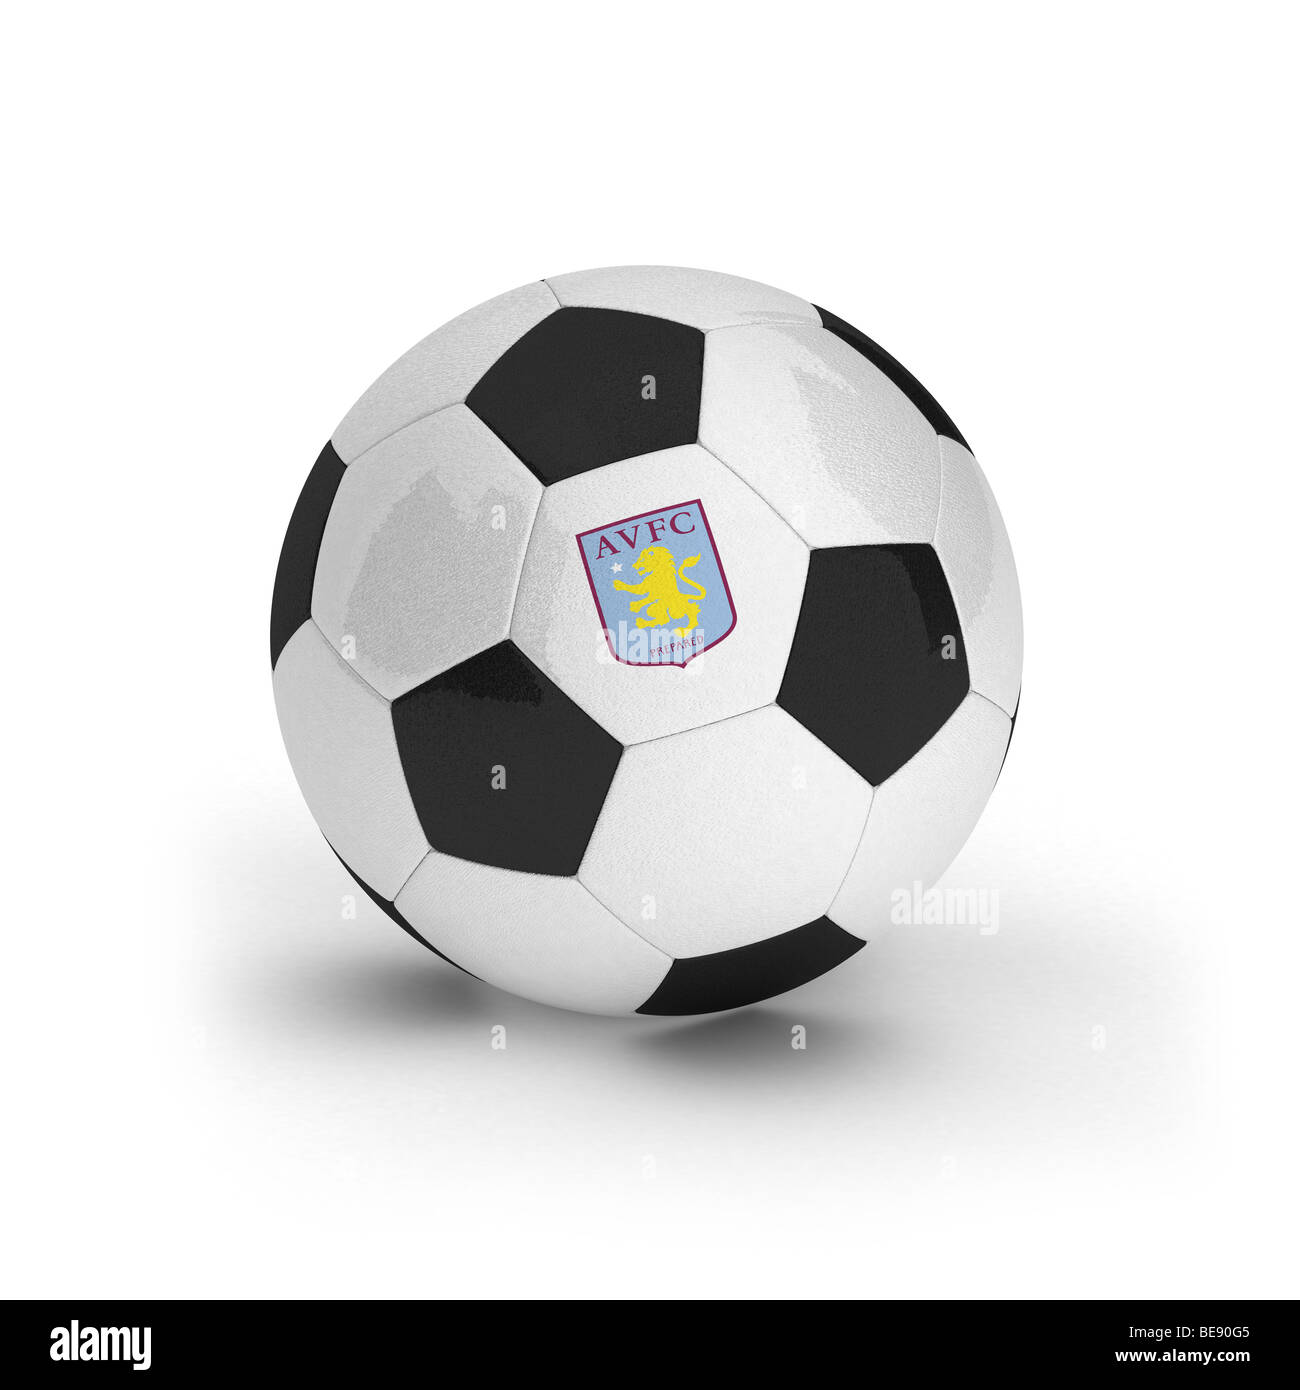 Aston Villa Football Club emblème sur un ballon de foot Banque D'Images